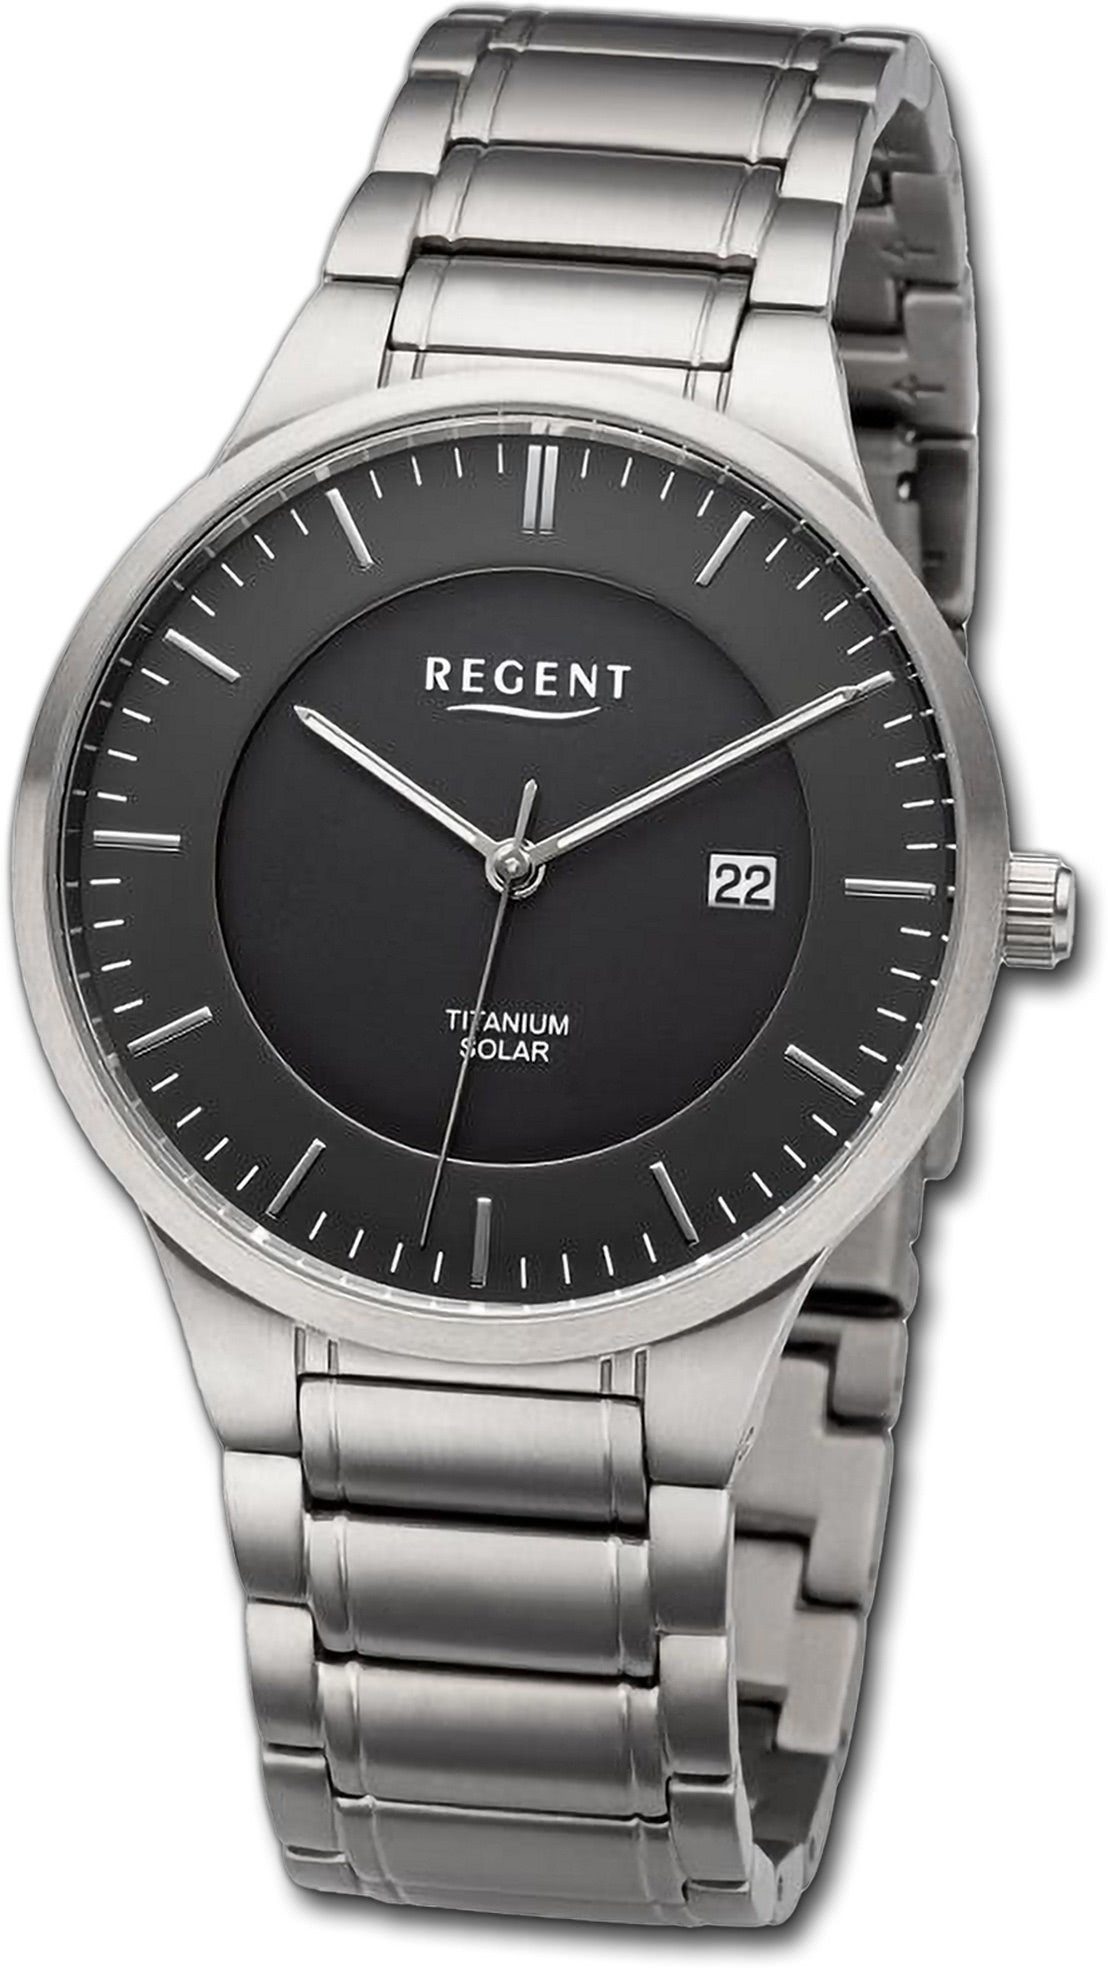 Analog, Metallarmband groß 40mm) Regent Armbanduhr Herrenuhr rundes Herren (ca. silber, Gehäuse, Regent extra Quarzuhr